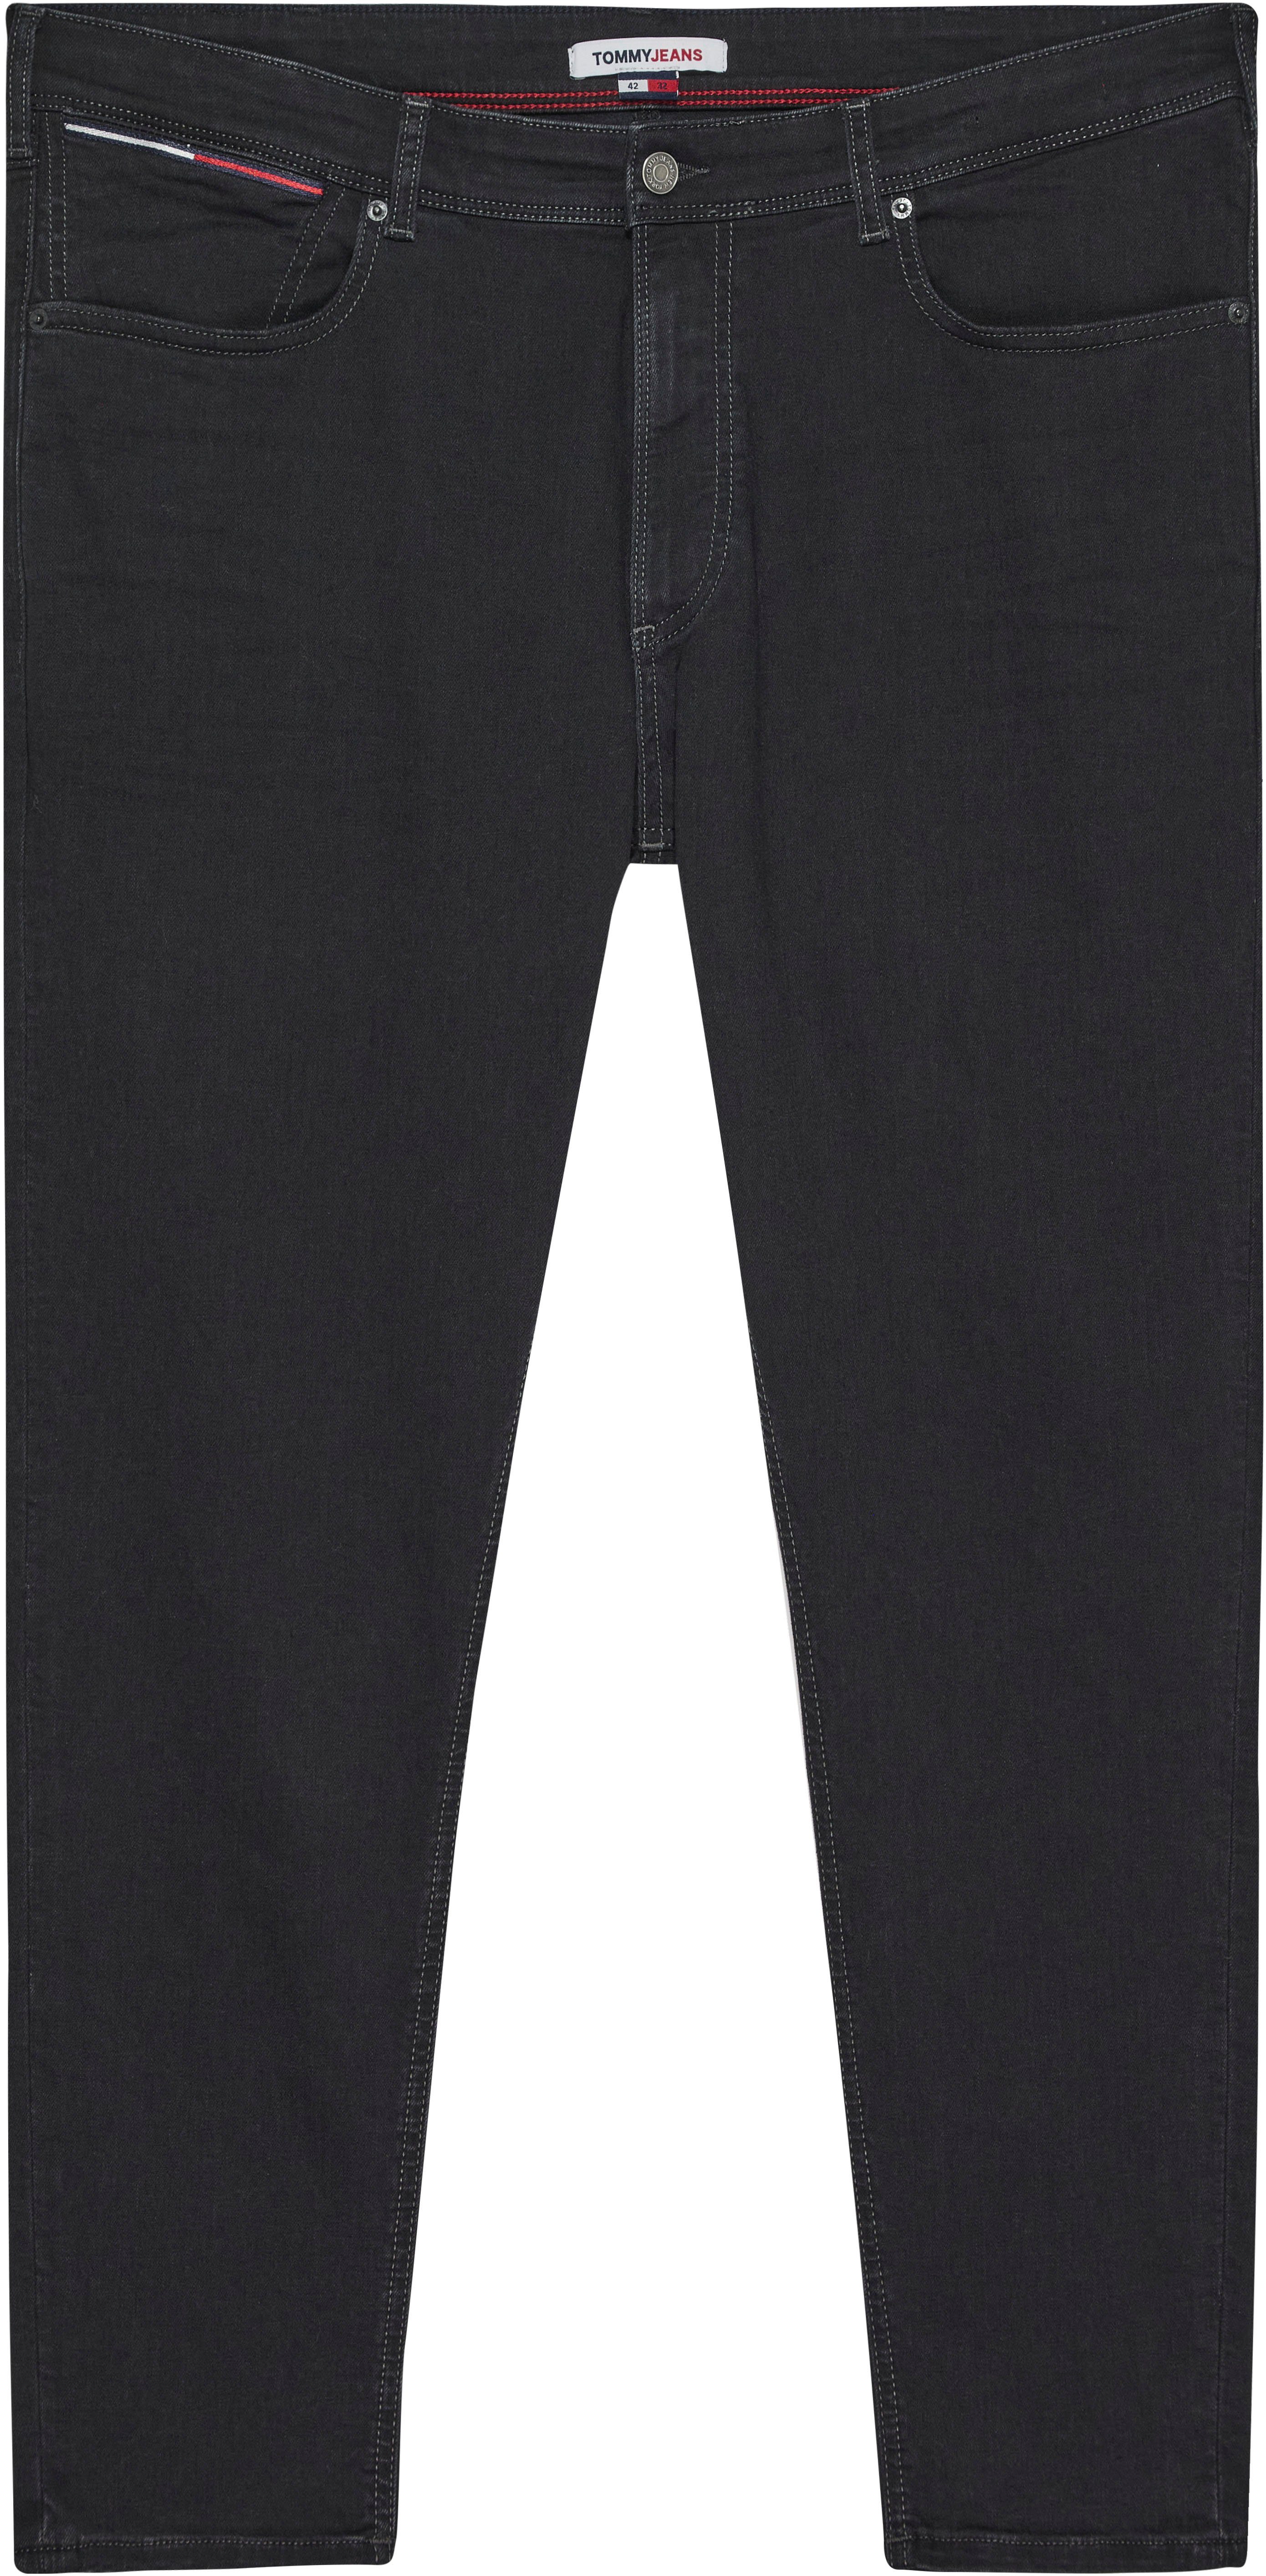 BG1252 PLUS Jeans Black SKNY Denim Plus Tommy SIMON Leder-Badge Skinny-fit-Jeans mit